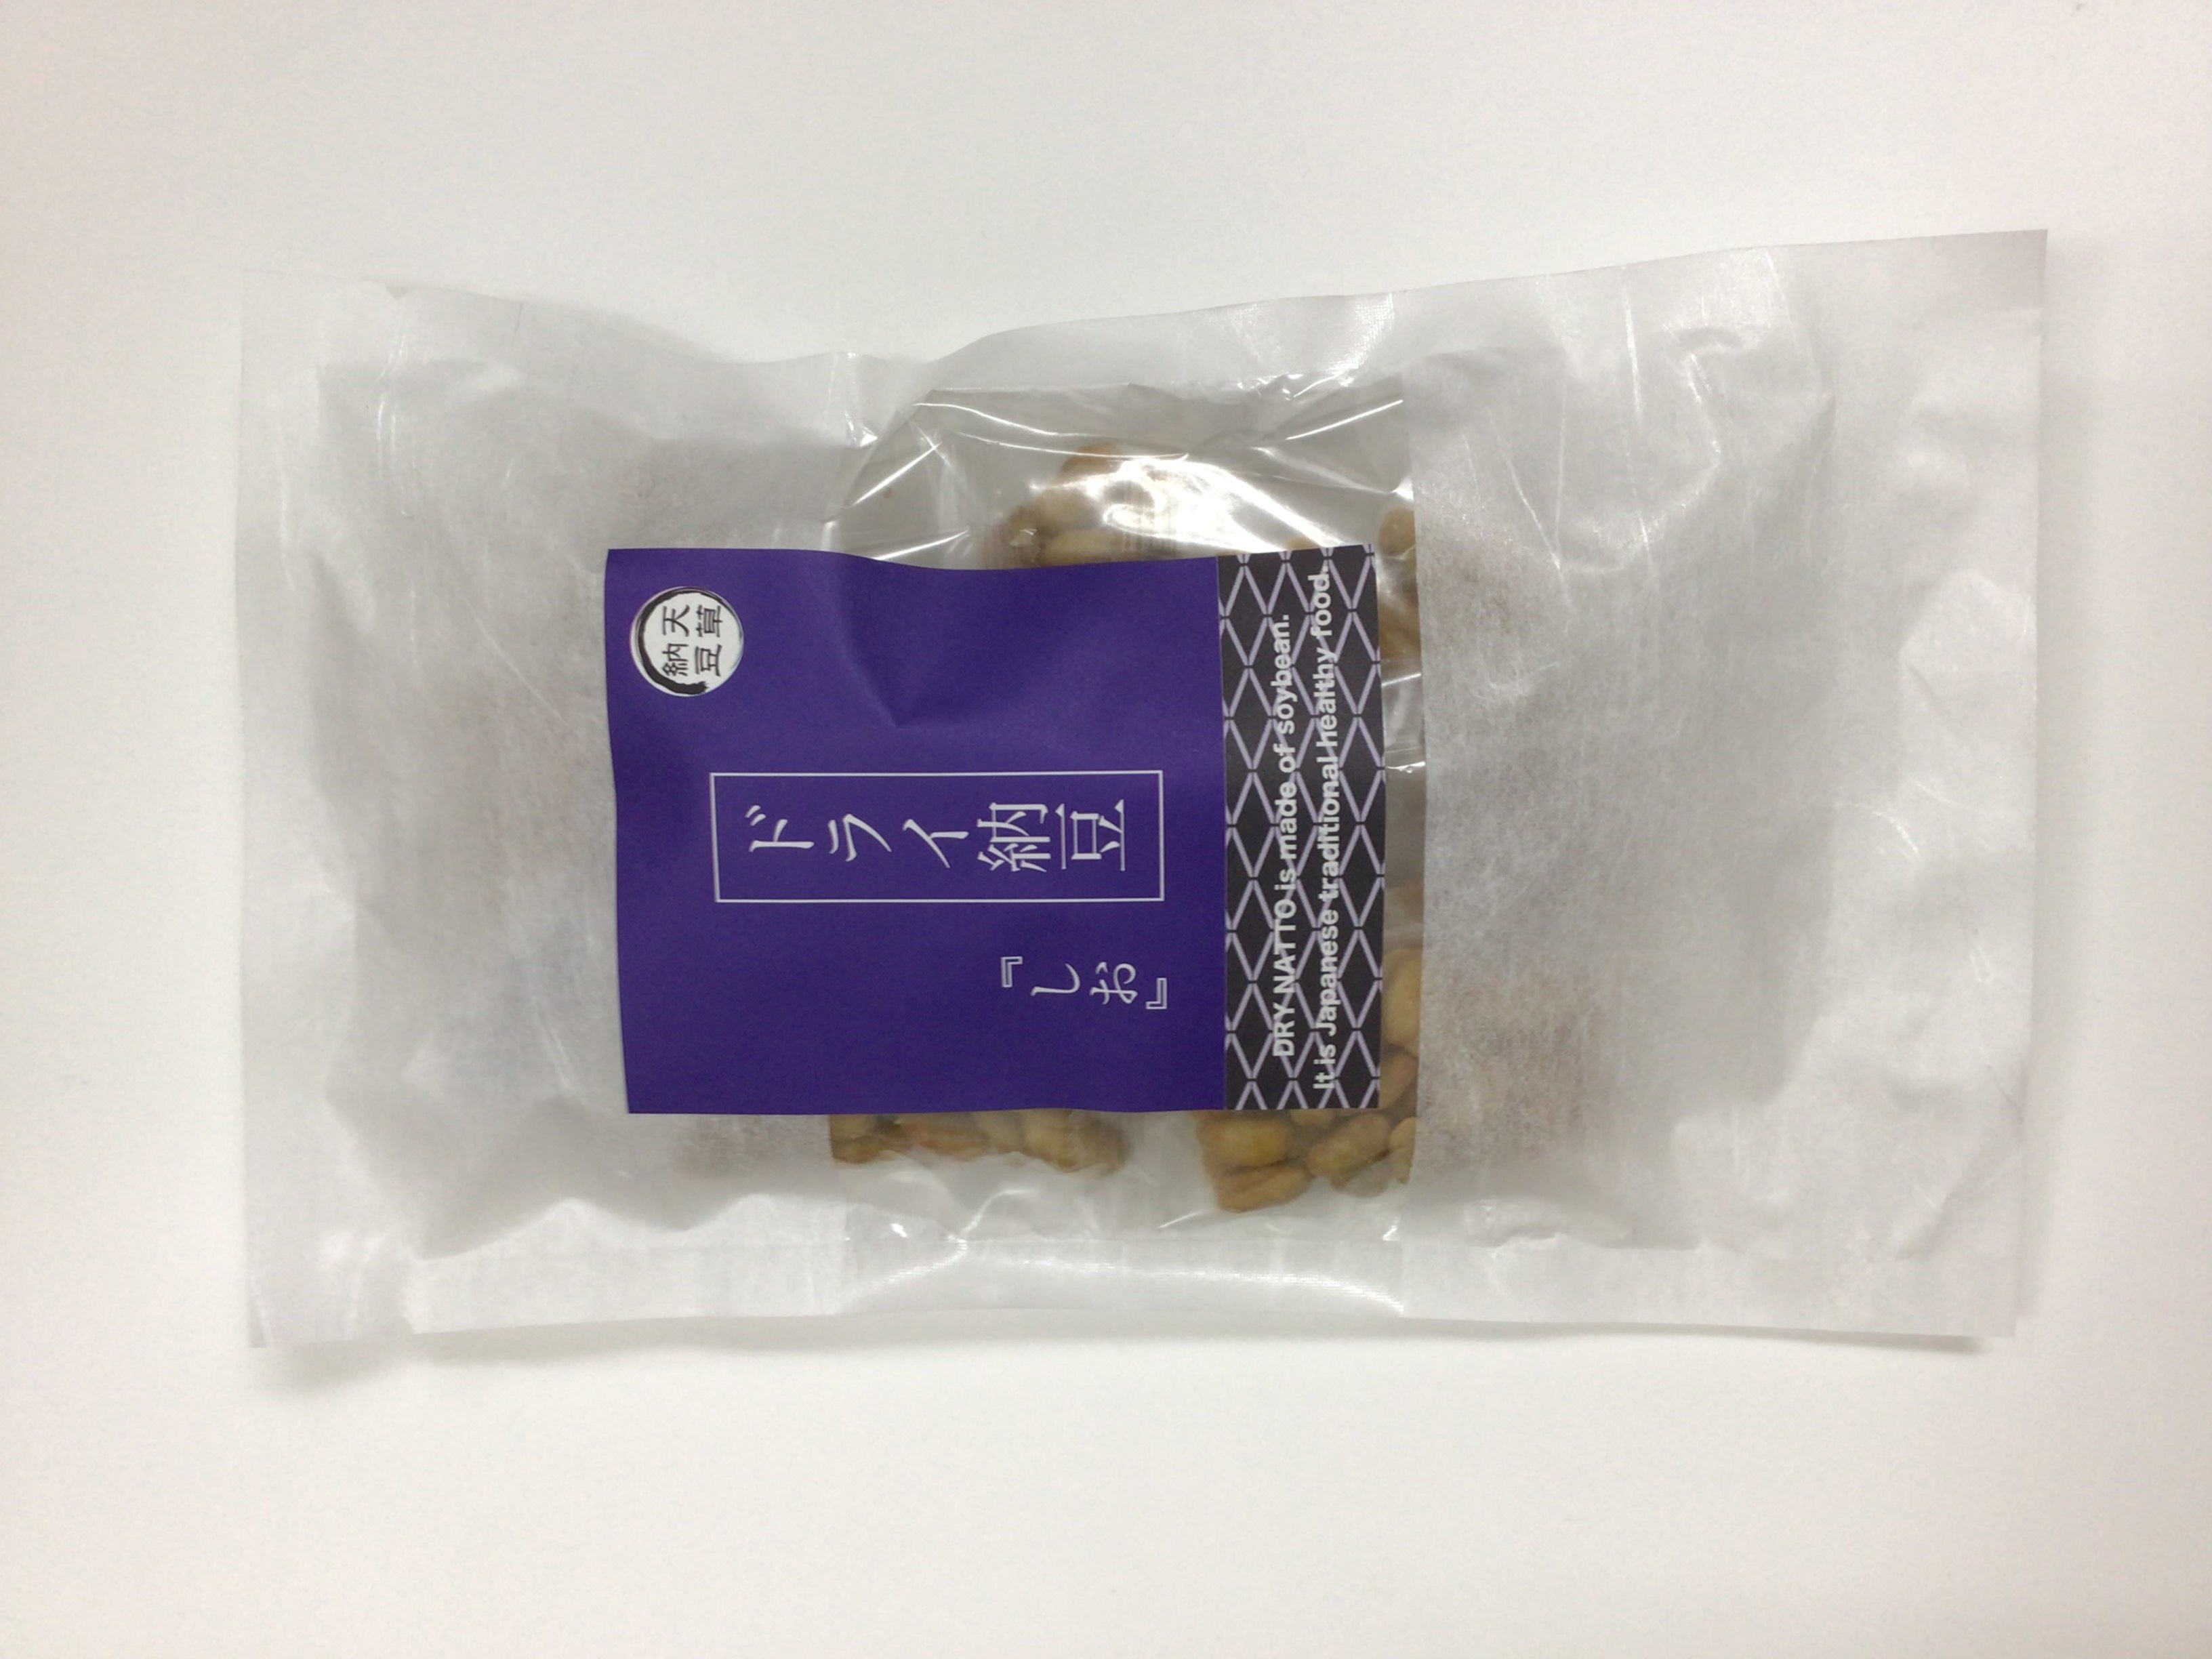 dry natto salt 1 set contains 30 bags